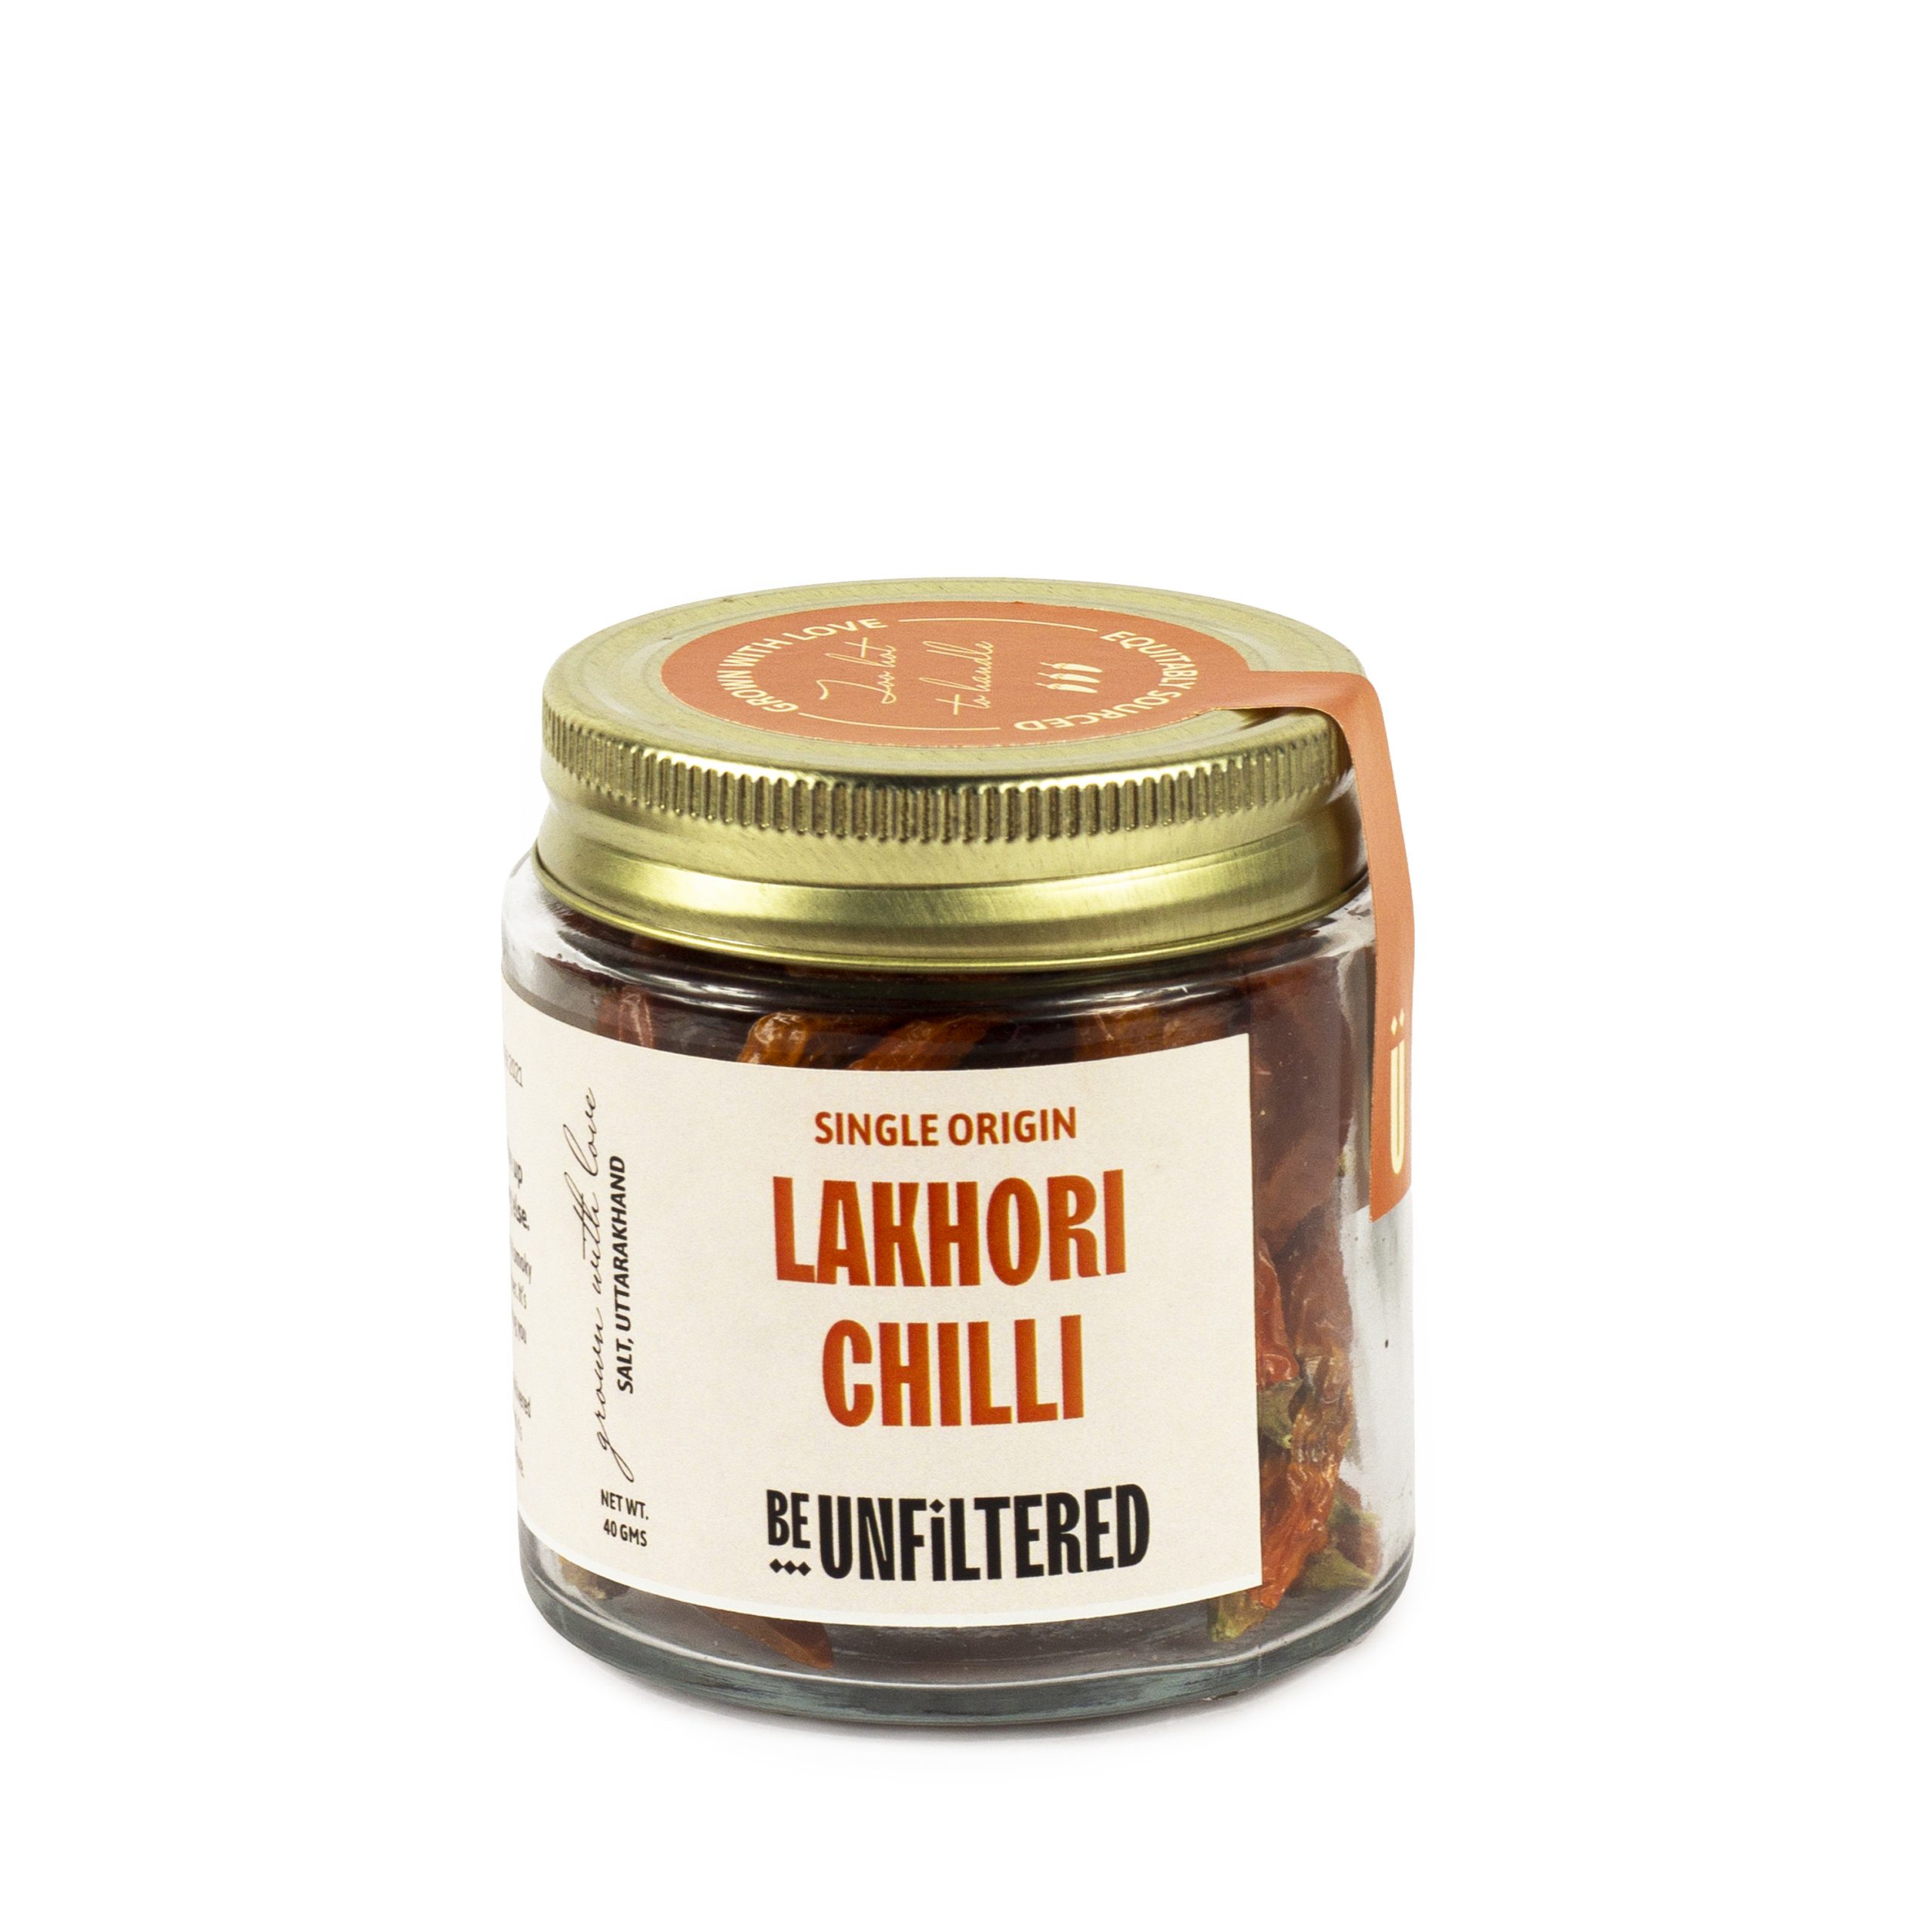 Be Unfiltered single origin organic lakhori chilli